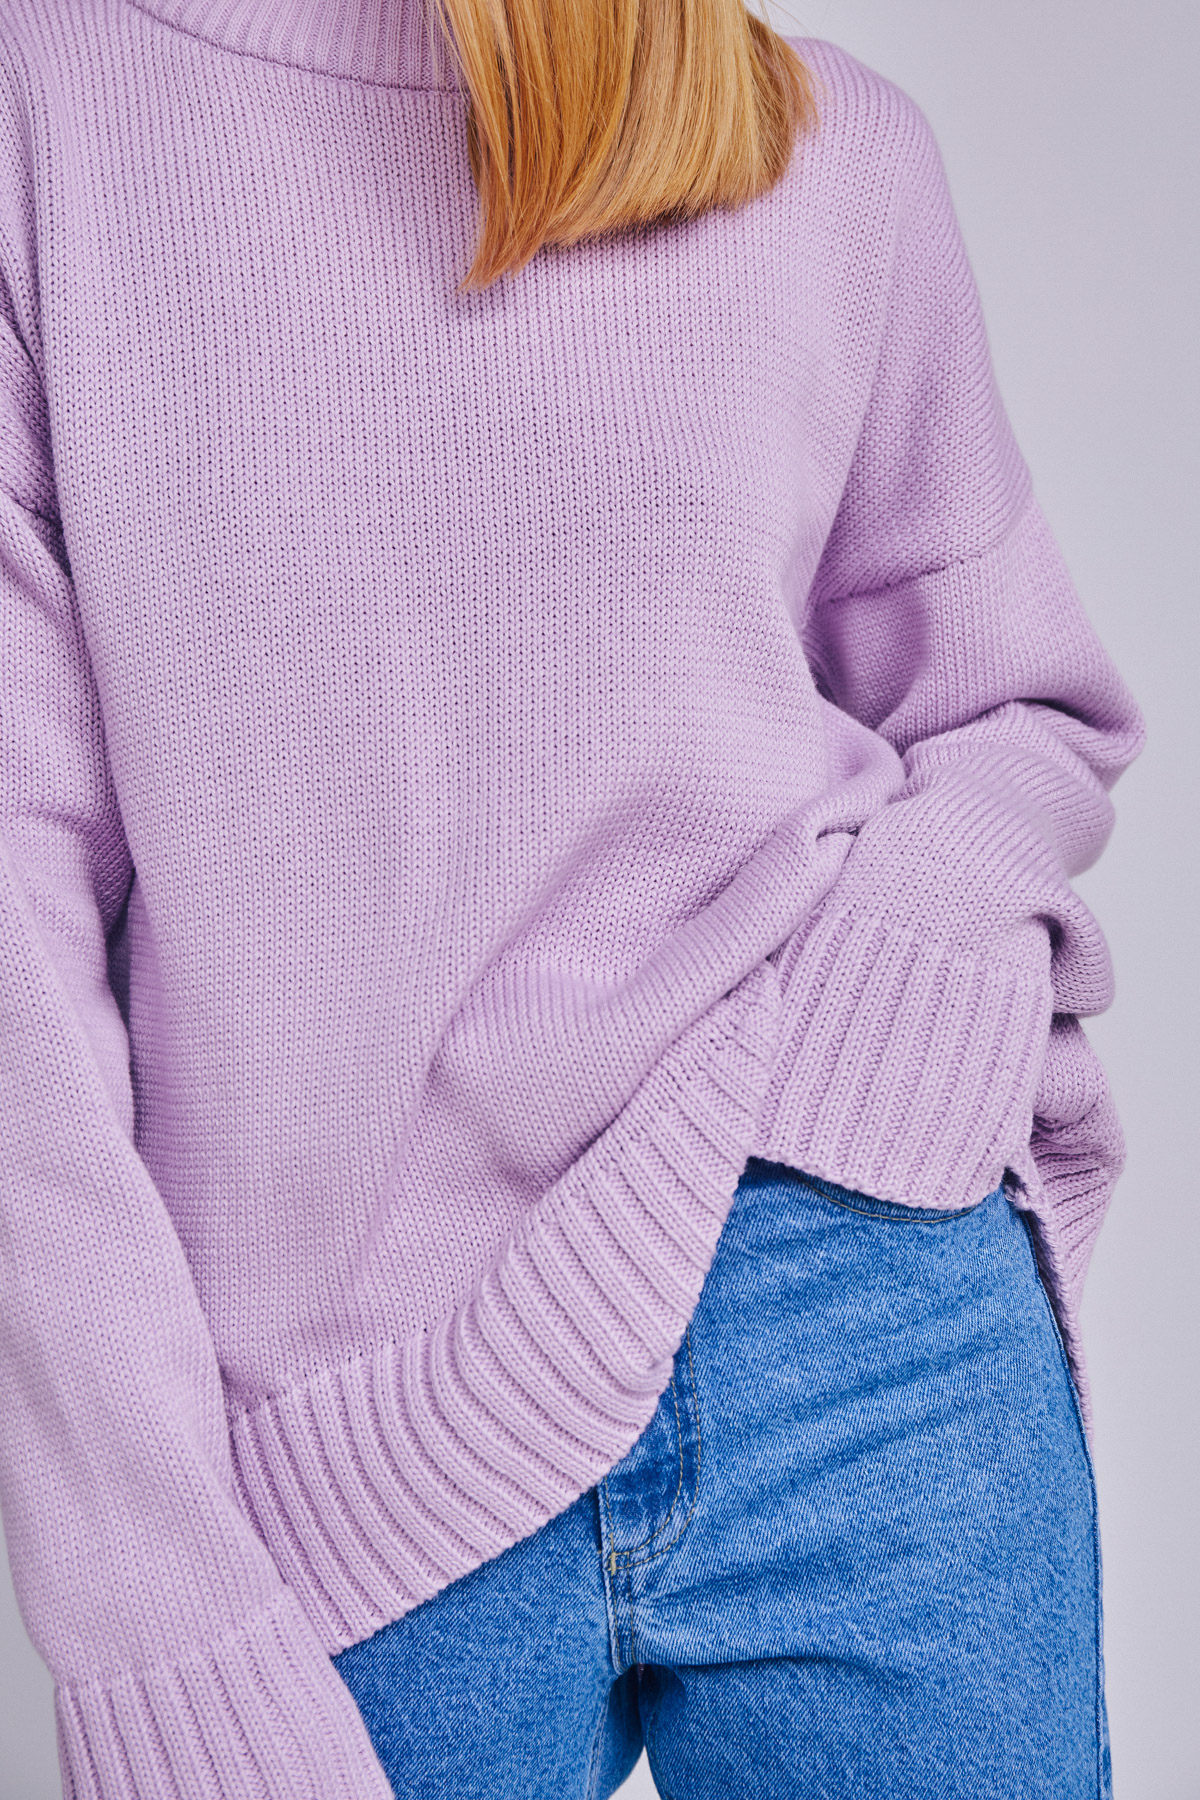 Purple knitted cotton sweater, photo 3